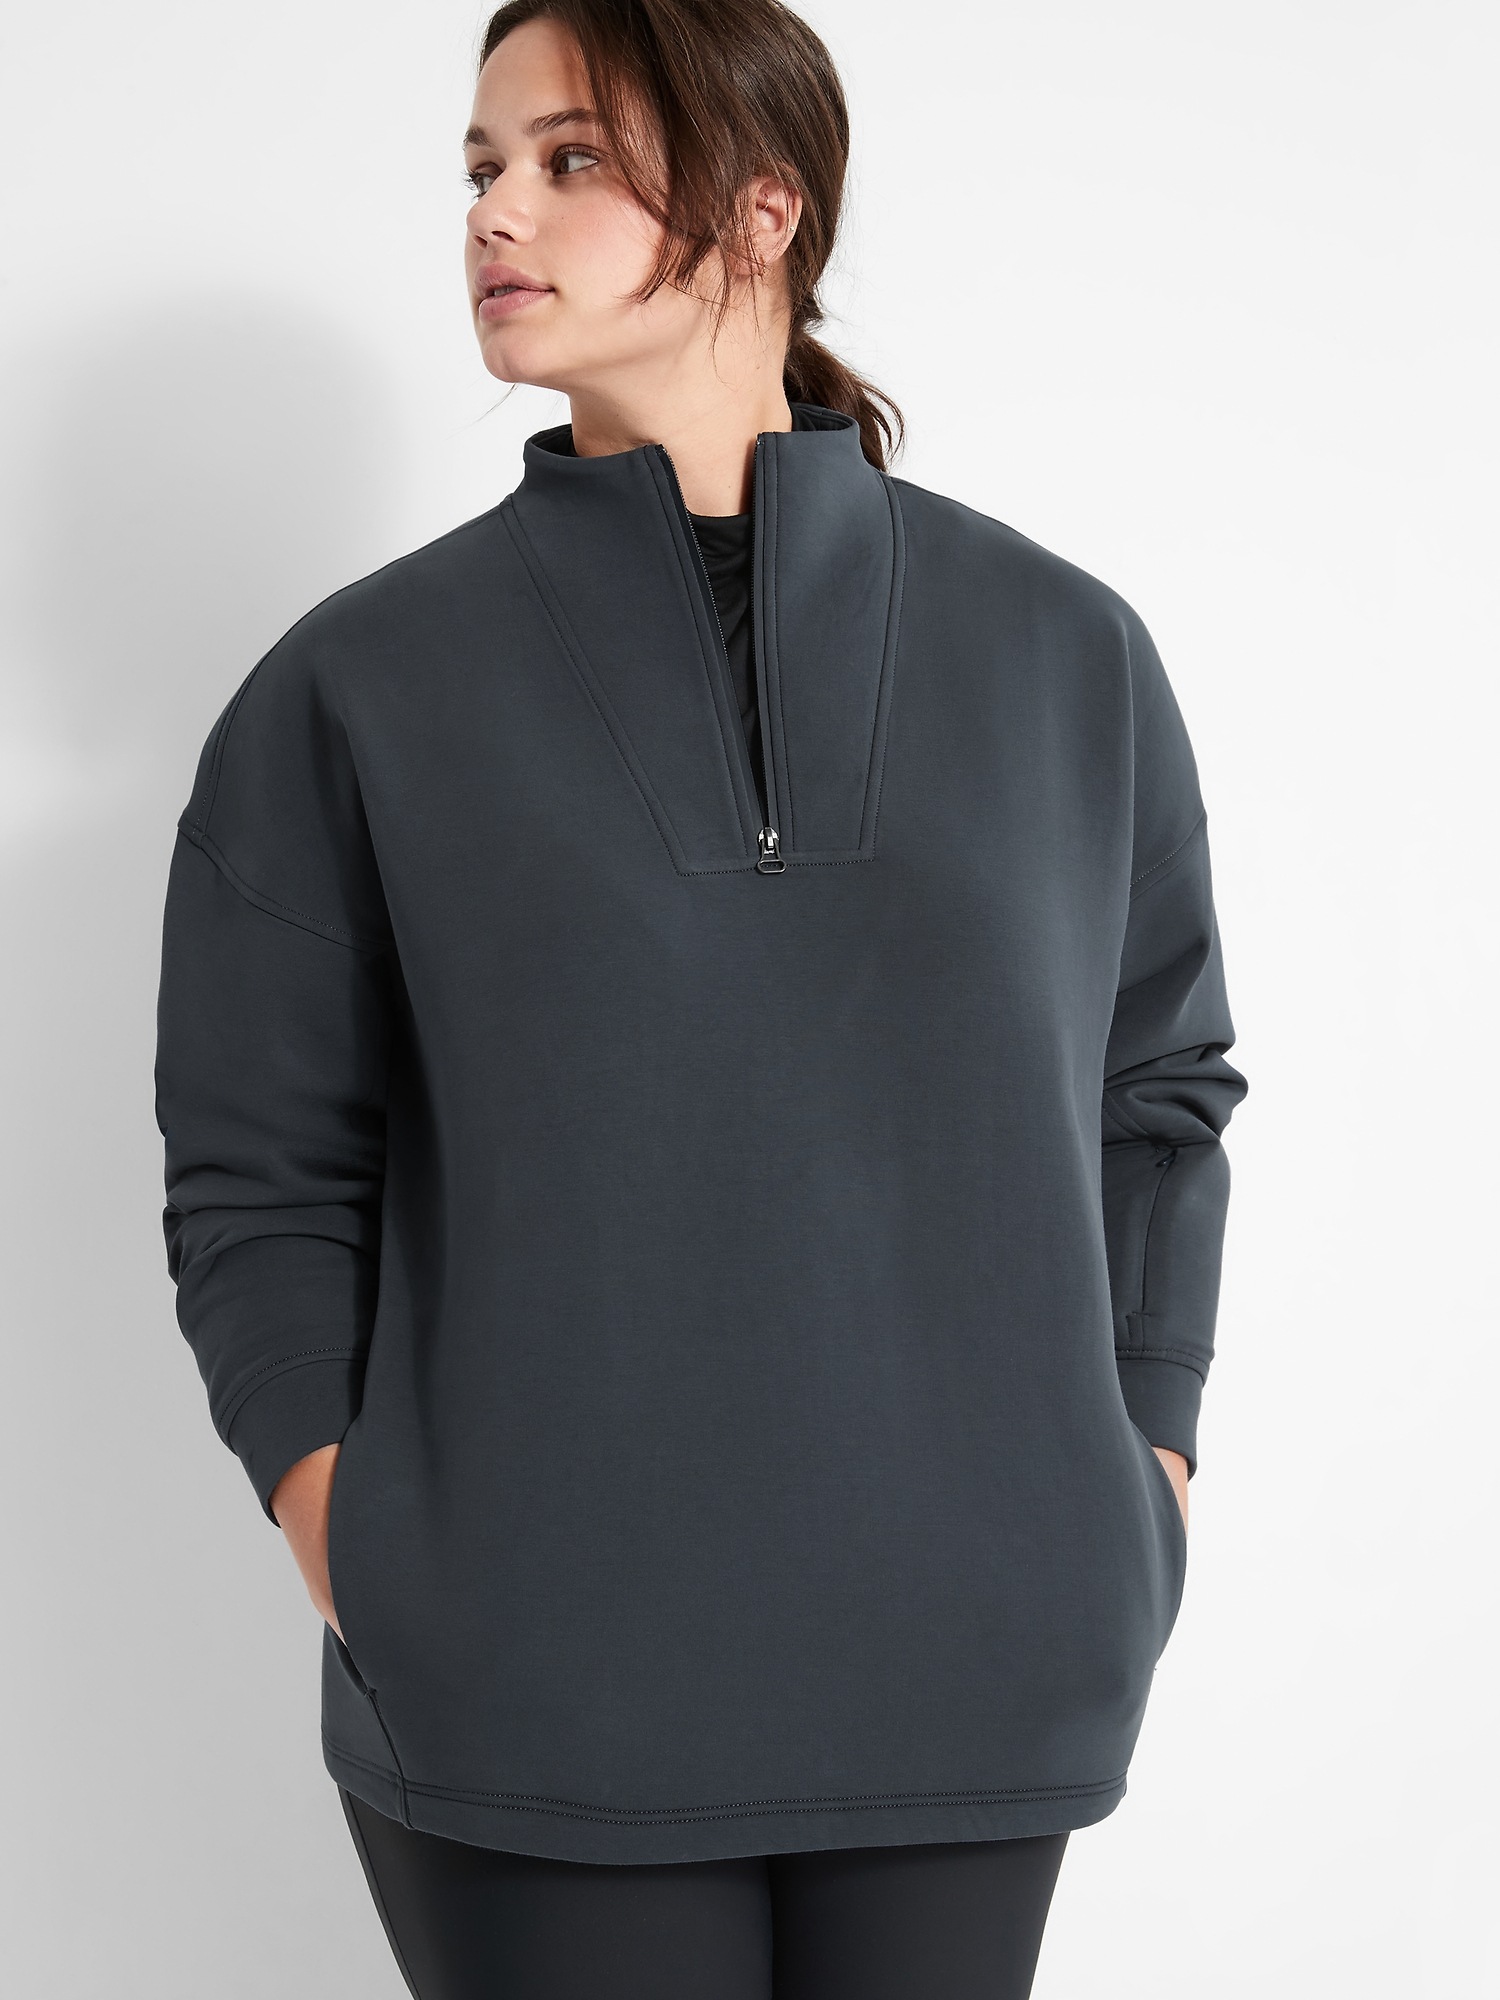 Scuba-Knit Sweatshirt Tunic